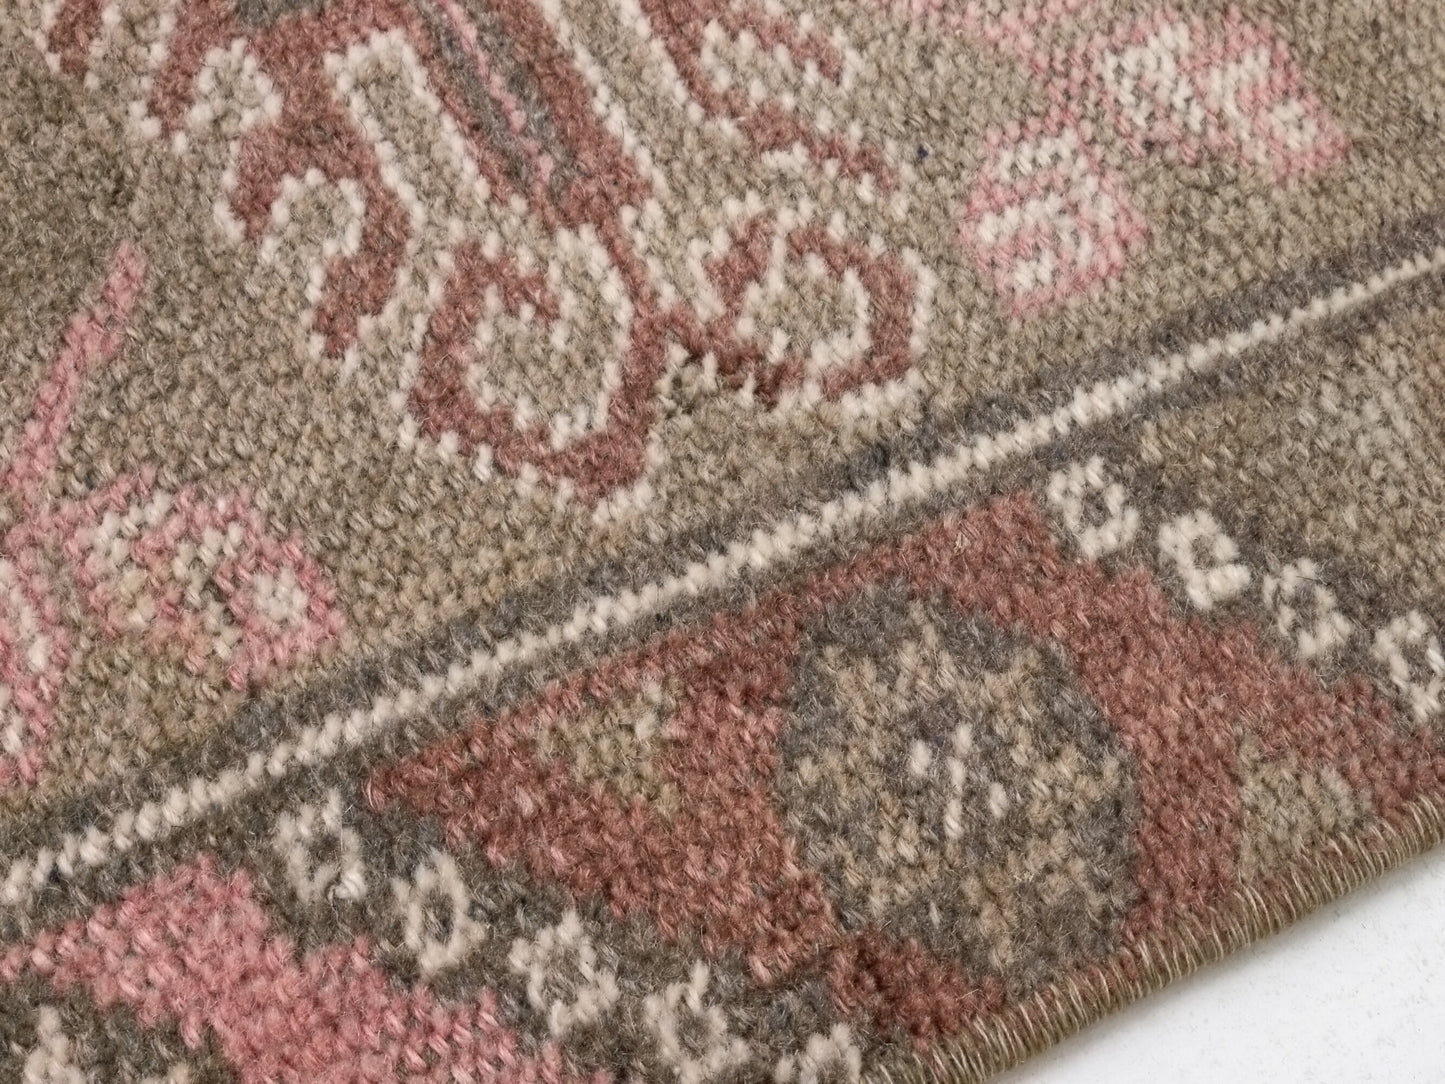 Small Antique Oushak Rug, Turkish Vintage Oushak Rug, Bedroom rug, Unique Rug, Anatolia rug, Handmade rug, Area rug 4x6, 10050